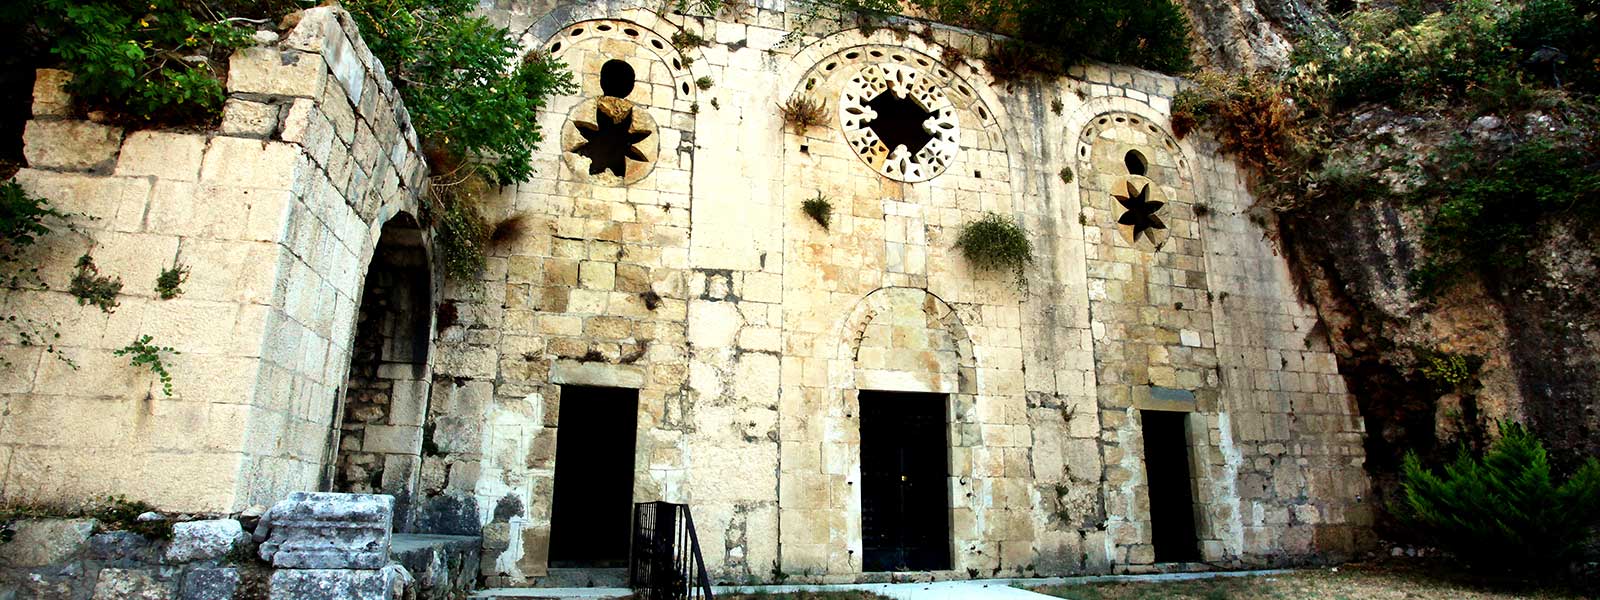 Antakya (Antioch) in Hatay Turkey